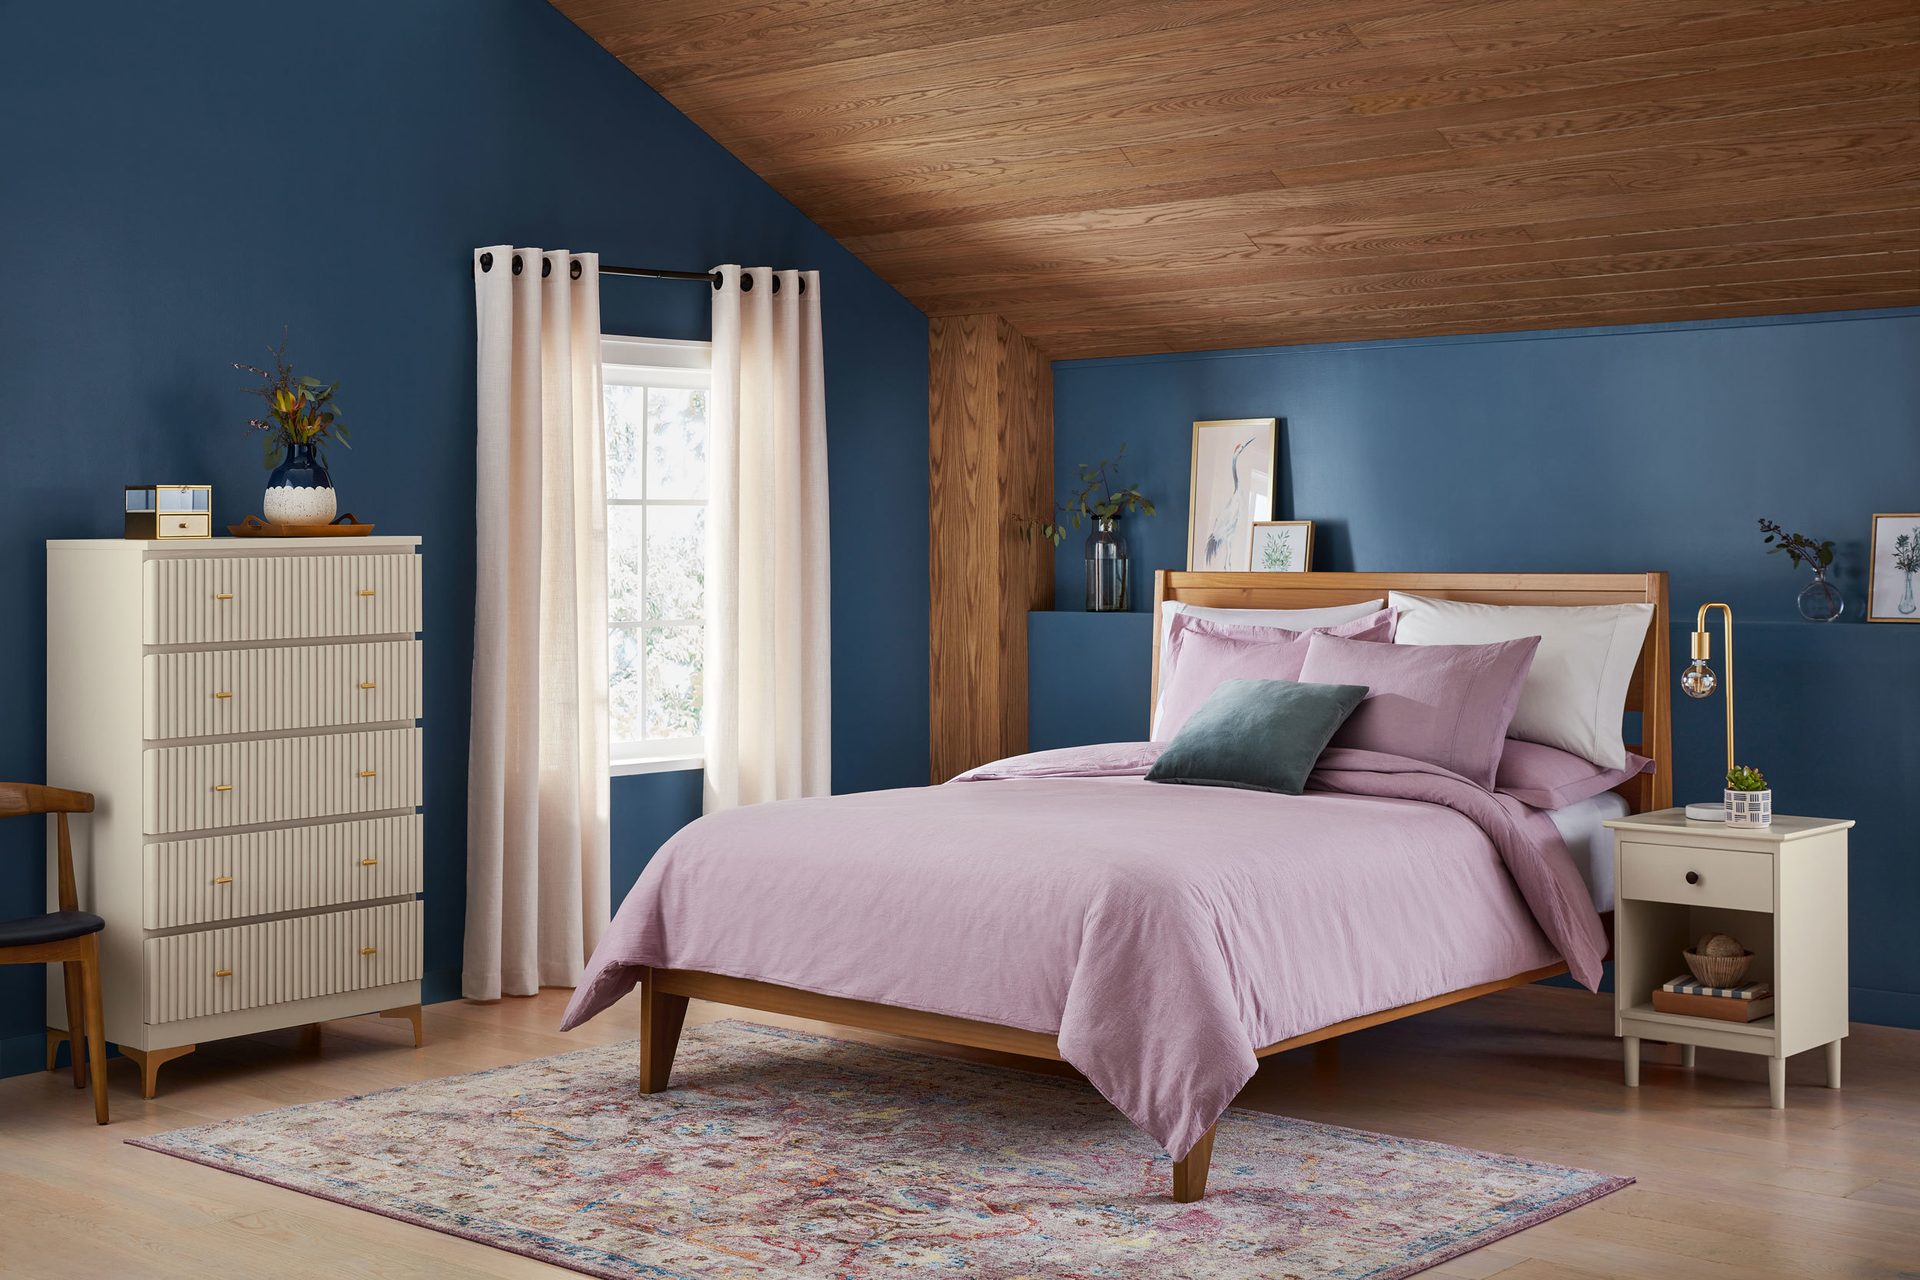 Bed frame, Furniture, Property, Blue, Comfort, Cabinetry, Azure, Wood, Building, Purple